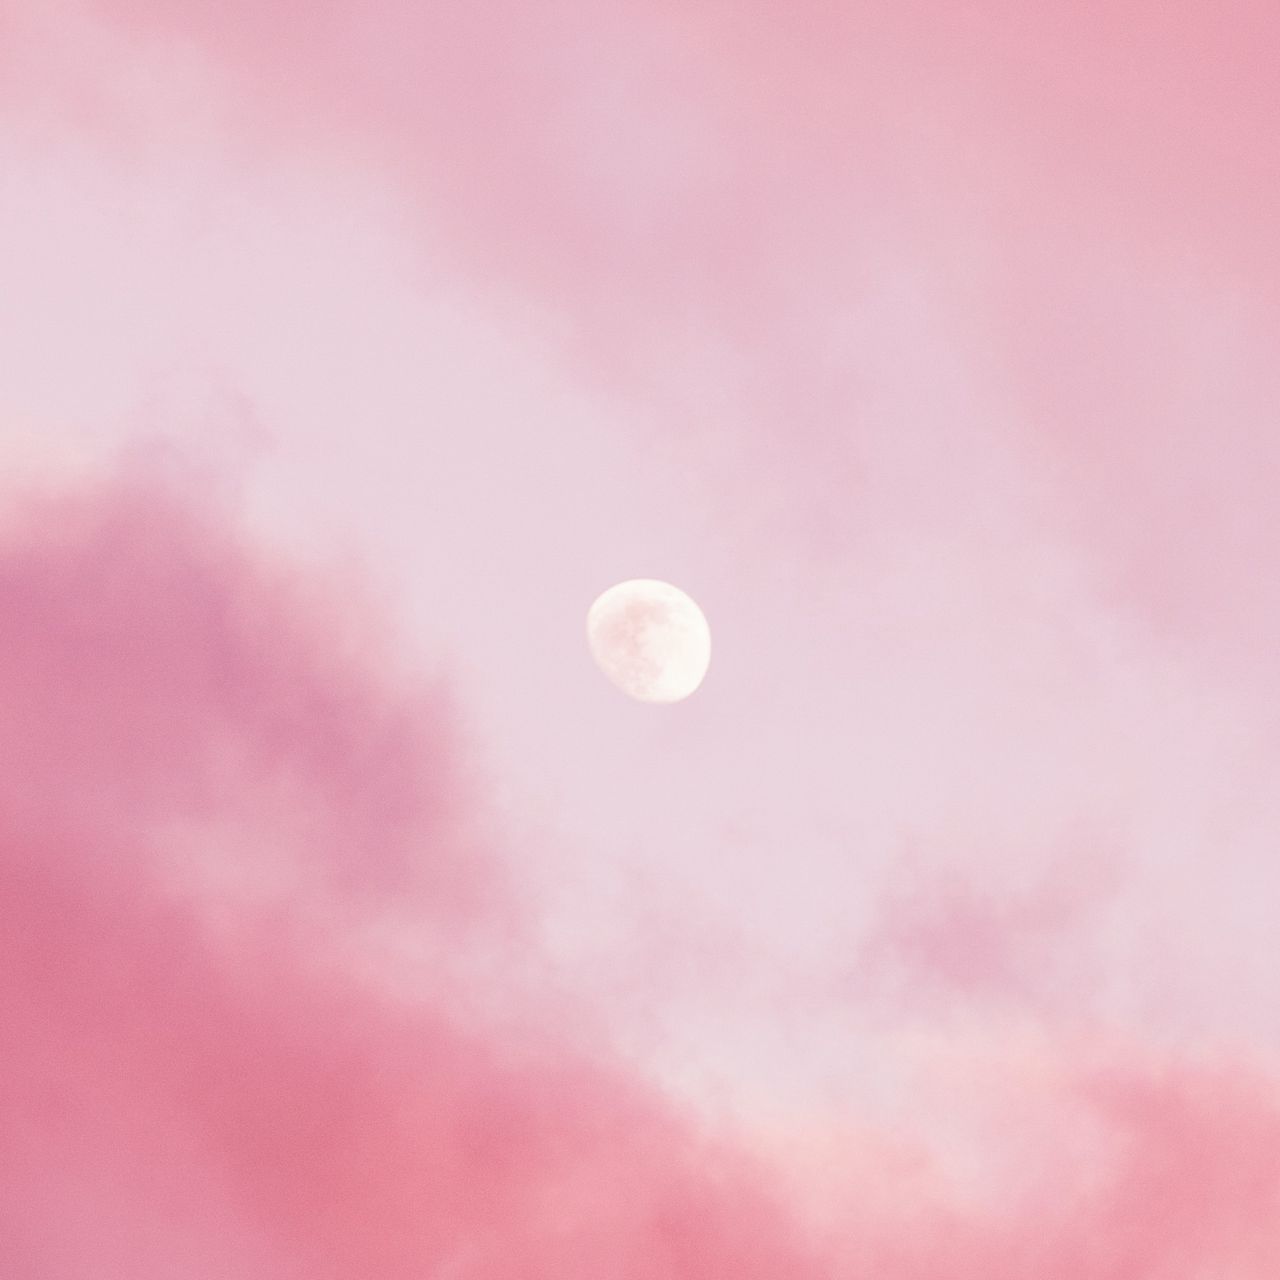 Download wallpaper 1280x1280 moon, clouds, pink, sky ipad, ipad 2 ...